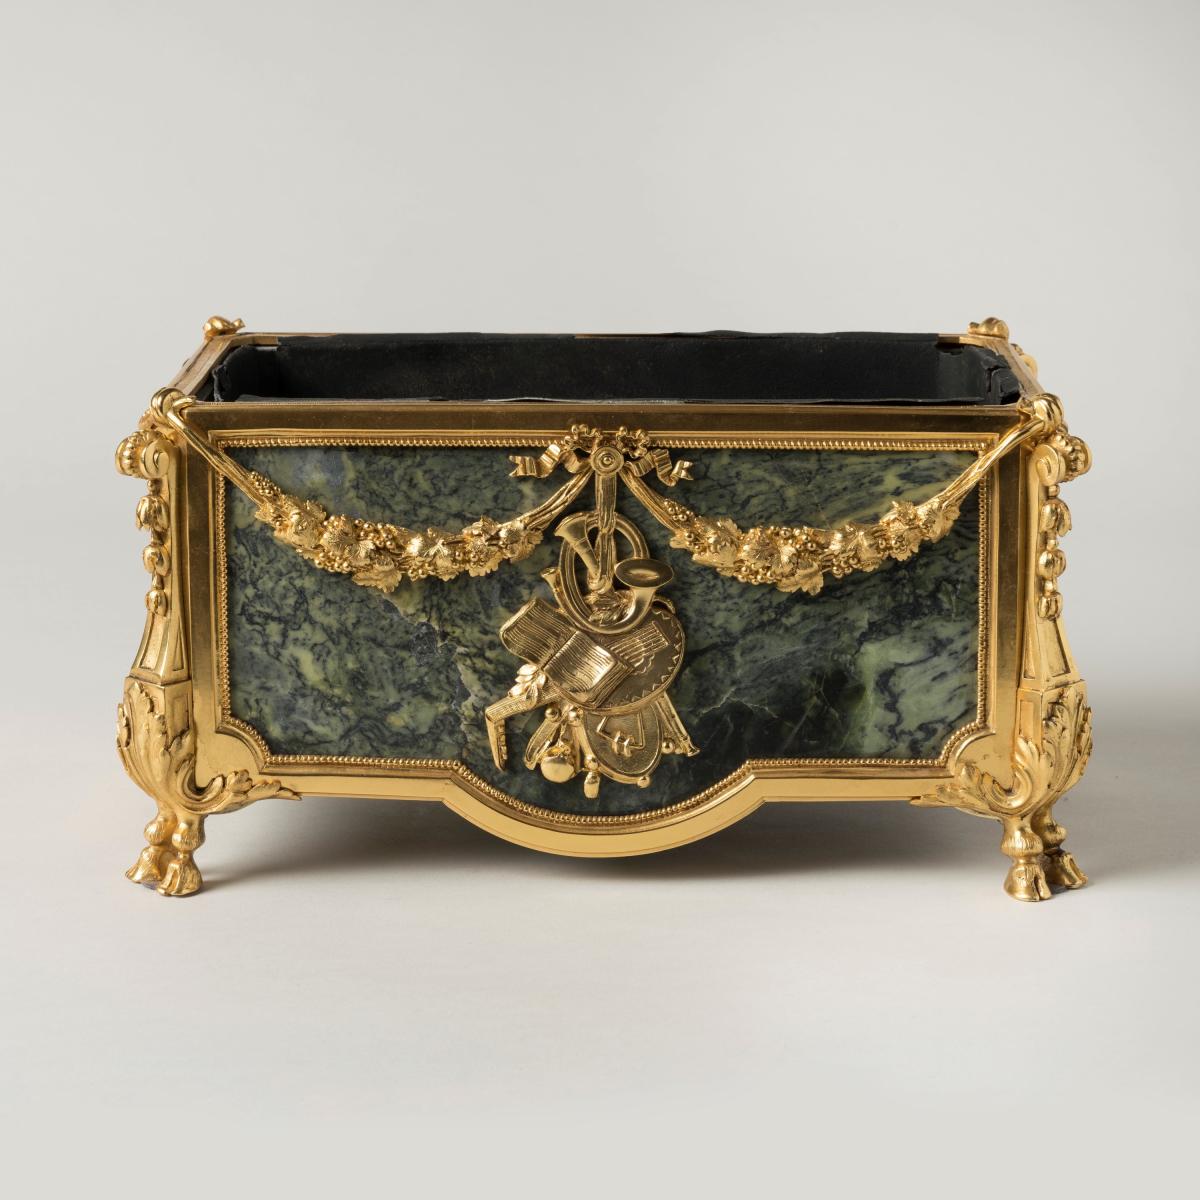 Ormolu-Mounted Marble Jardinière In the Louis XVI Style